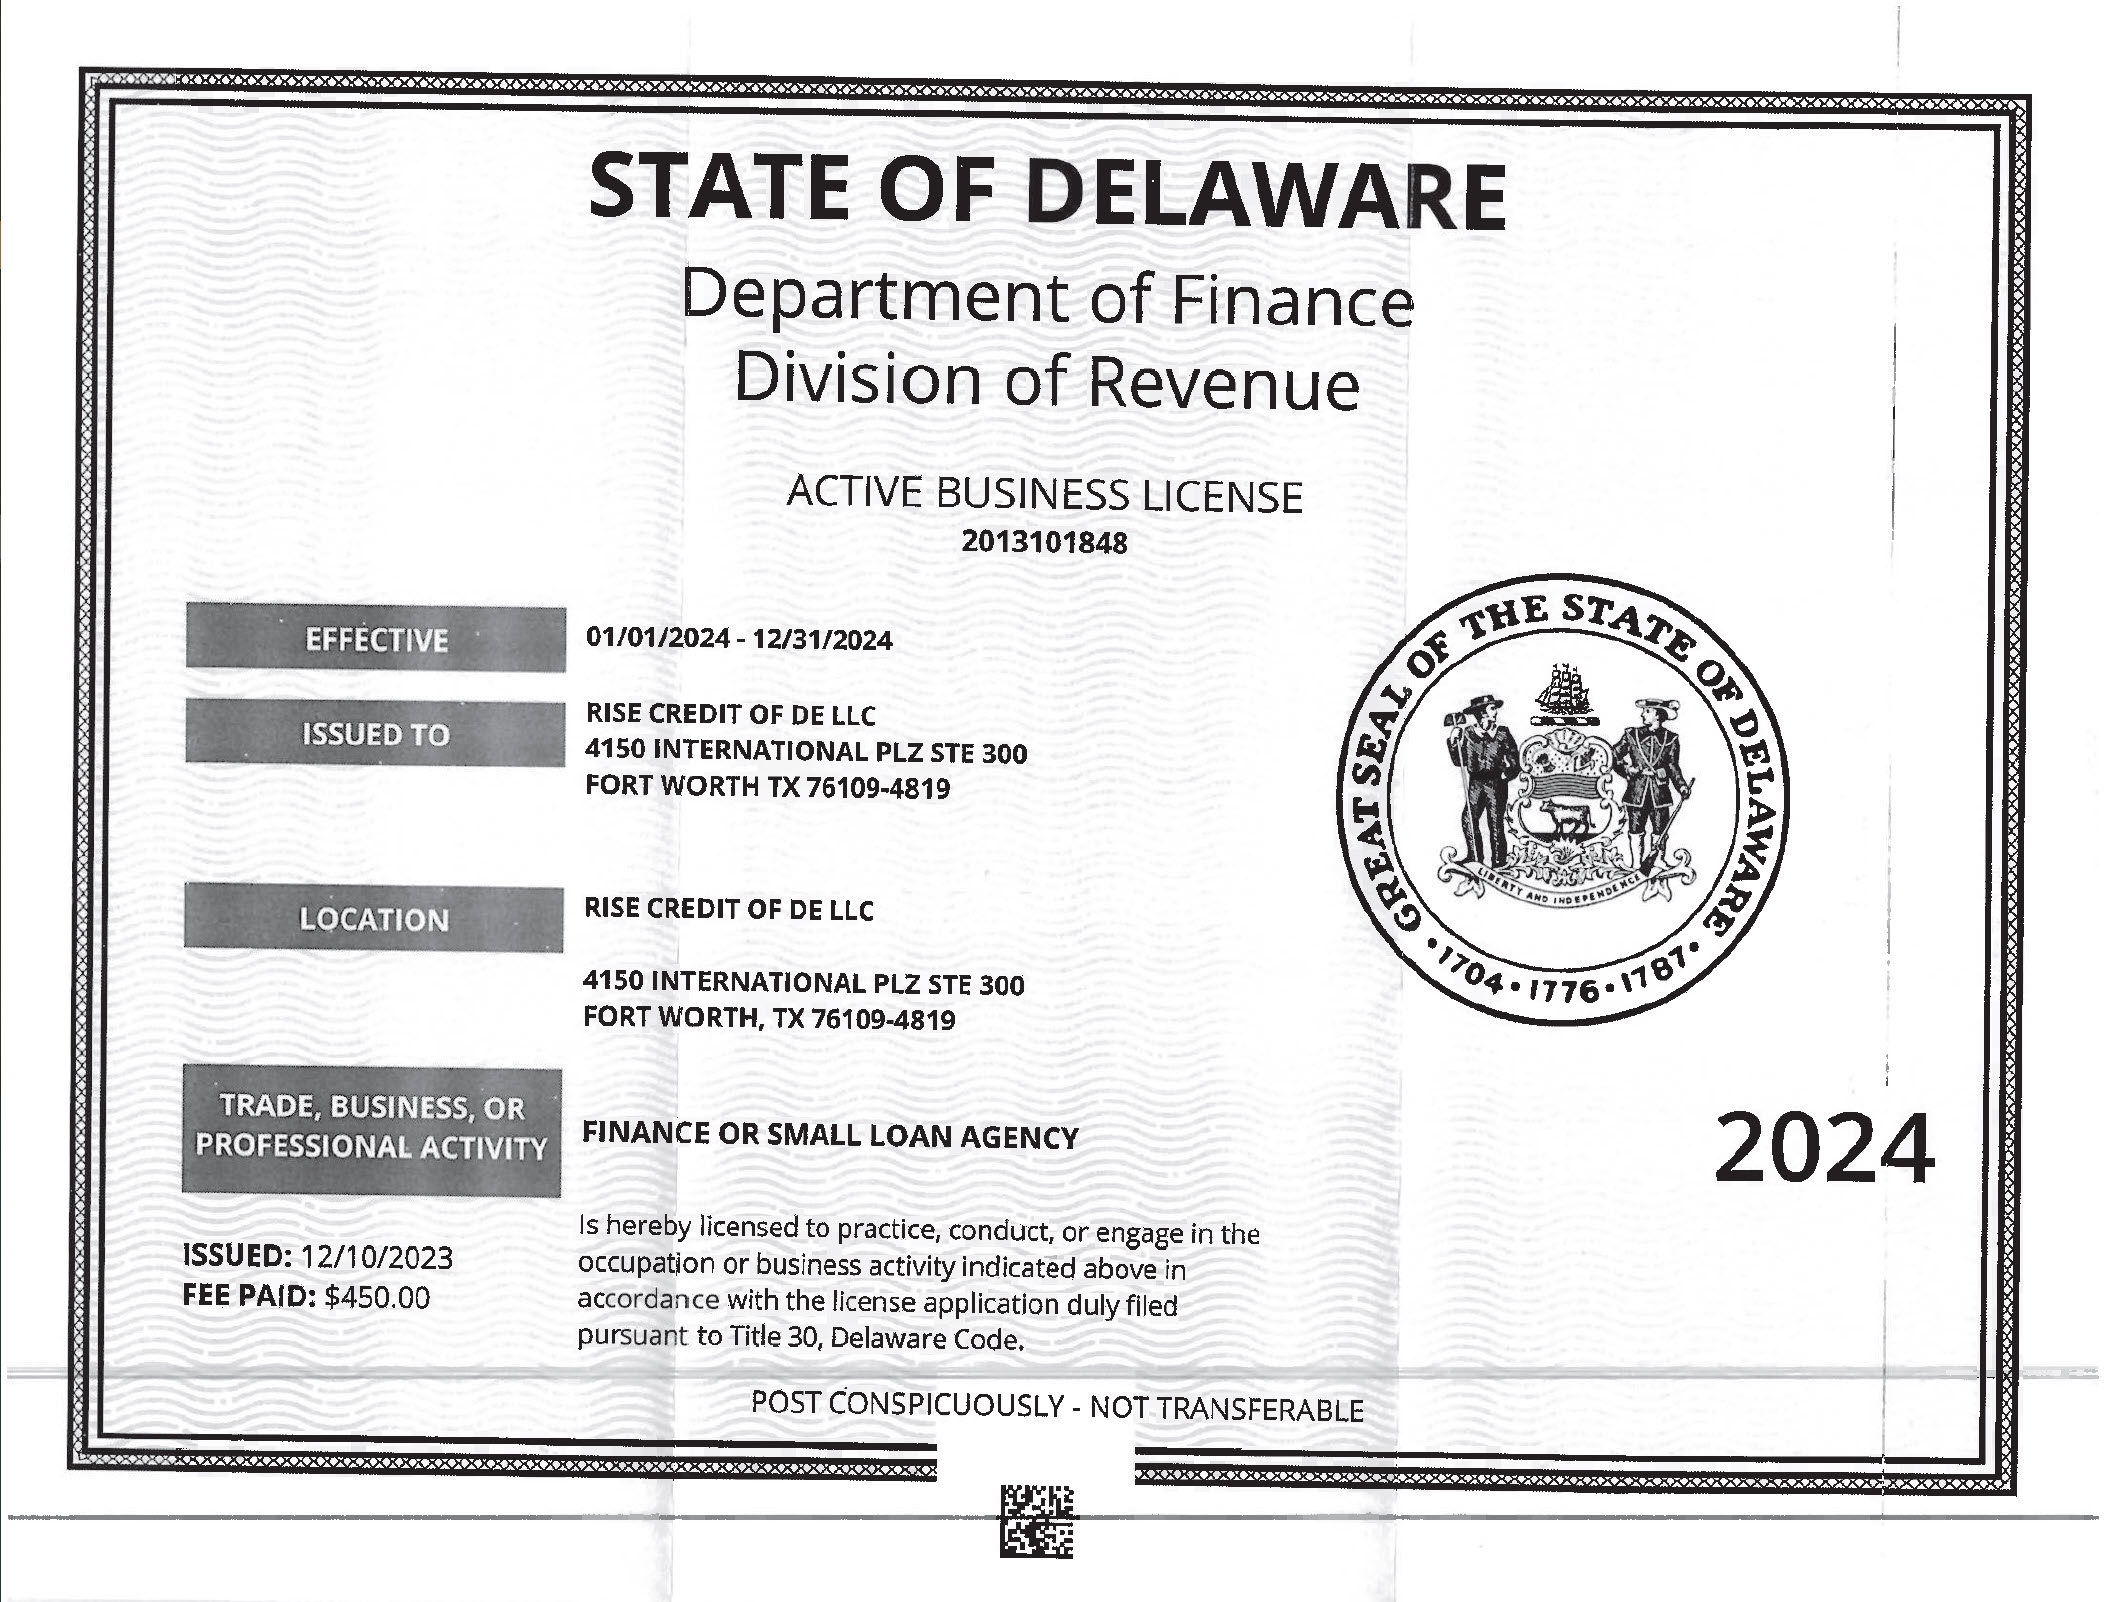 Delaware State License Image